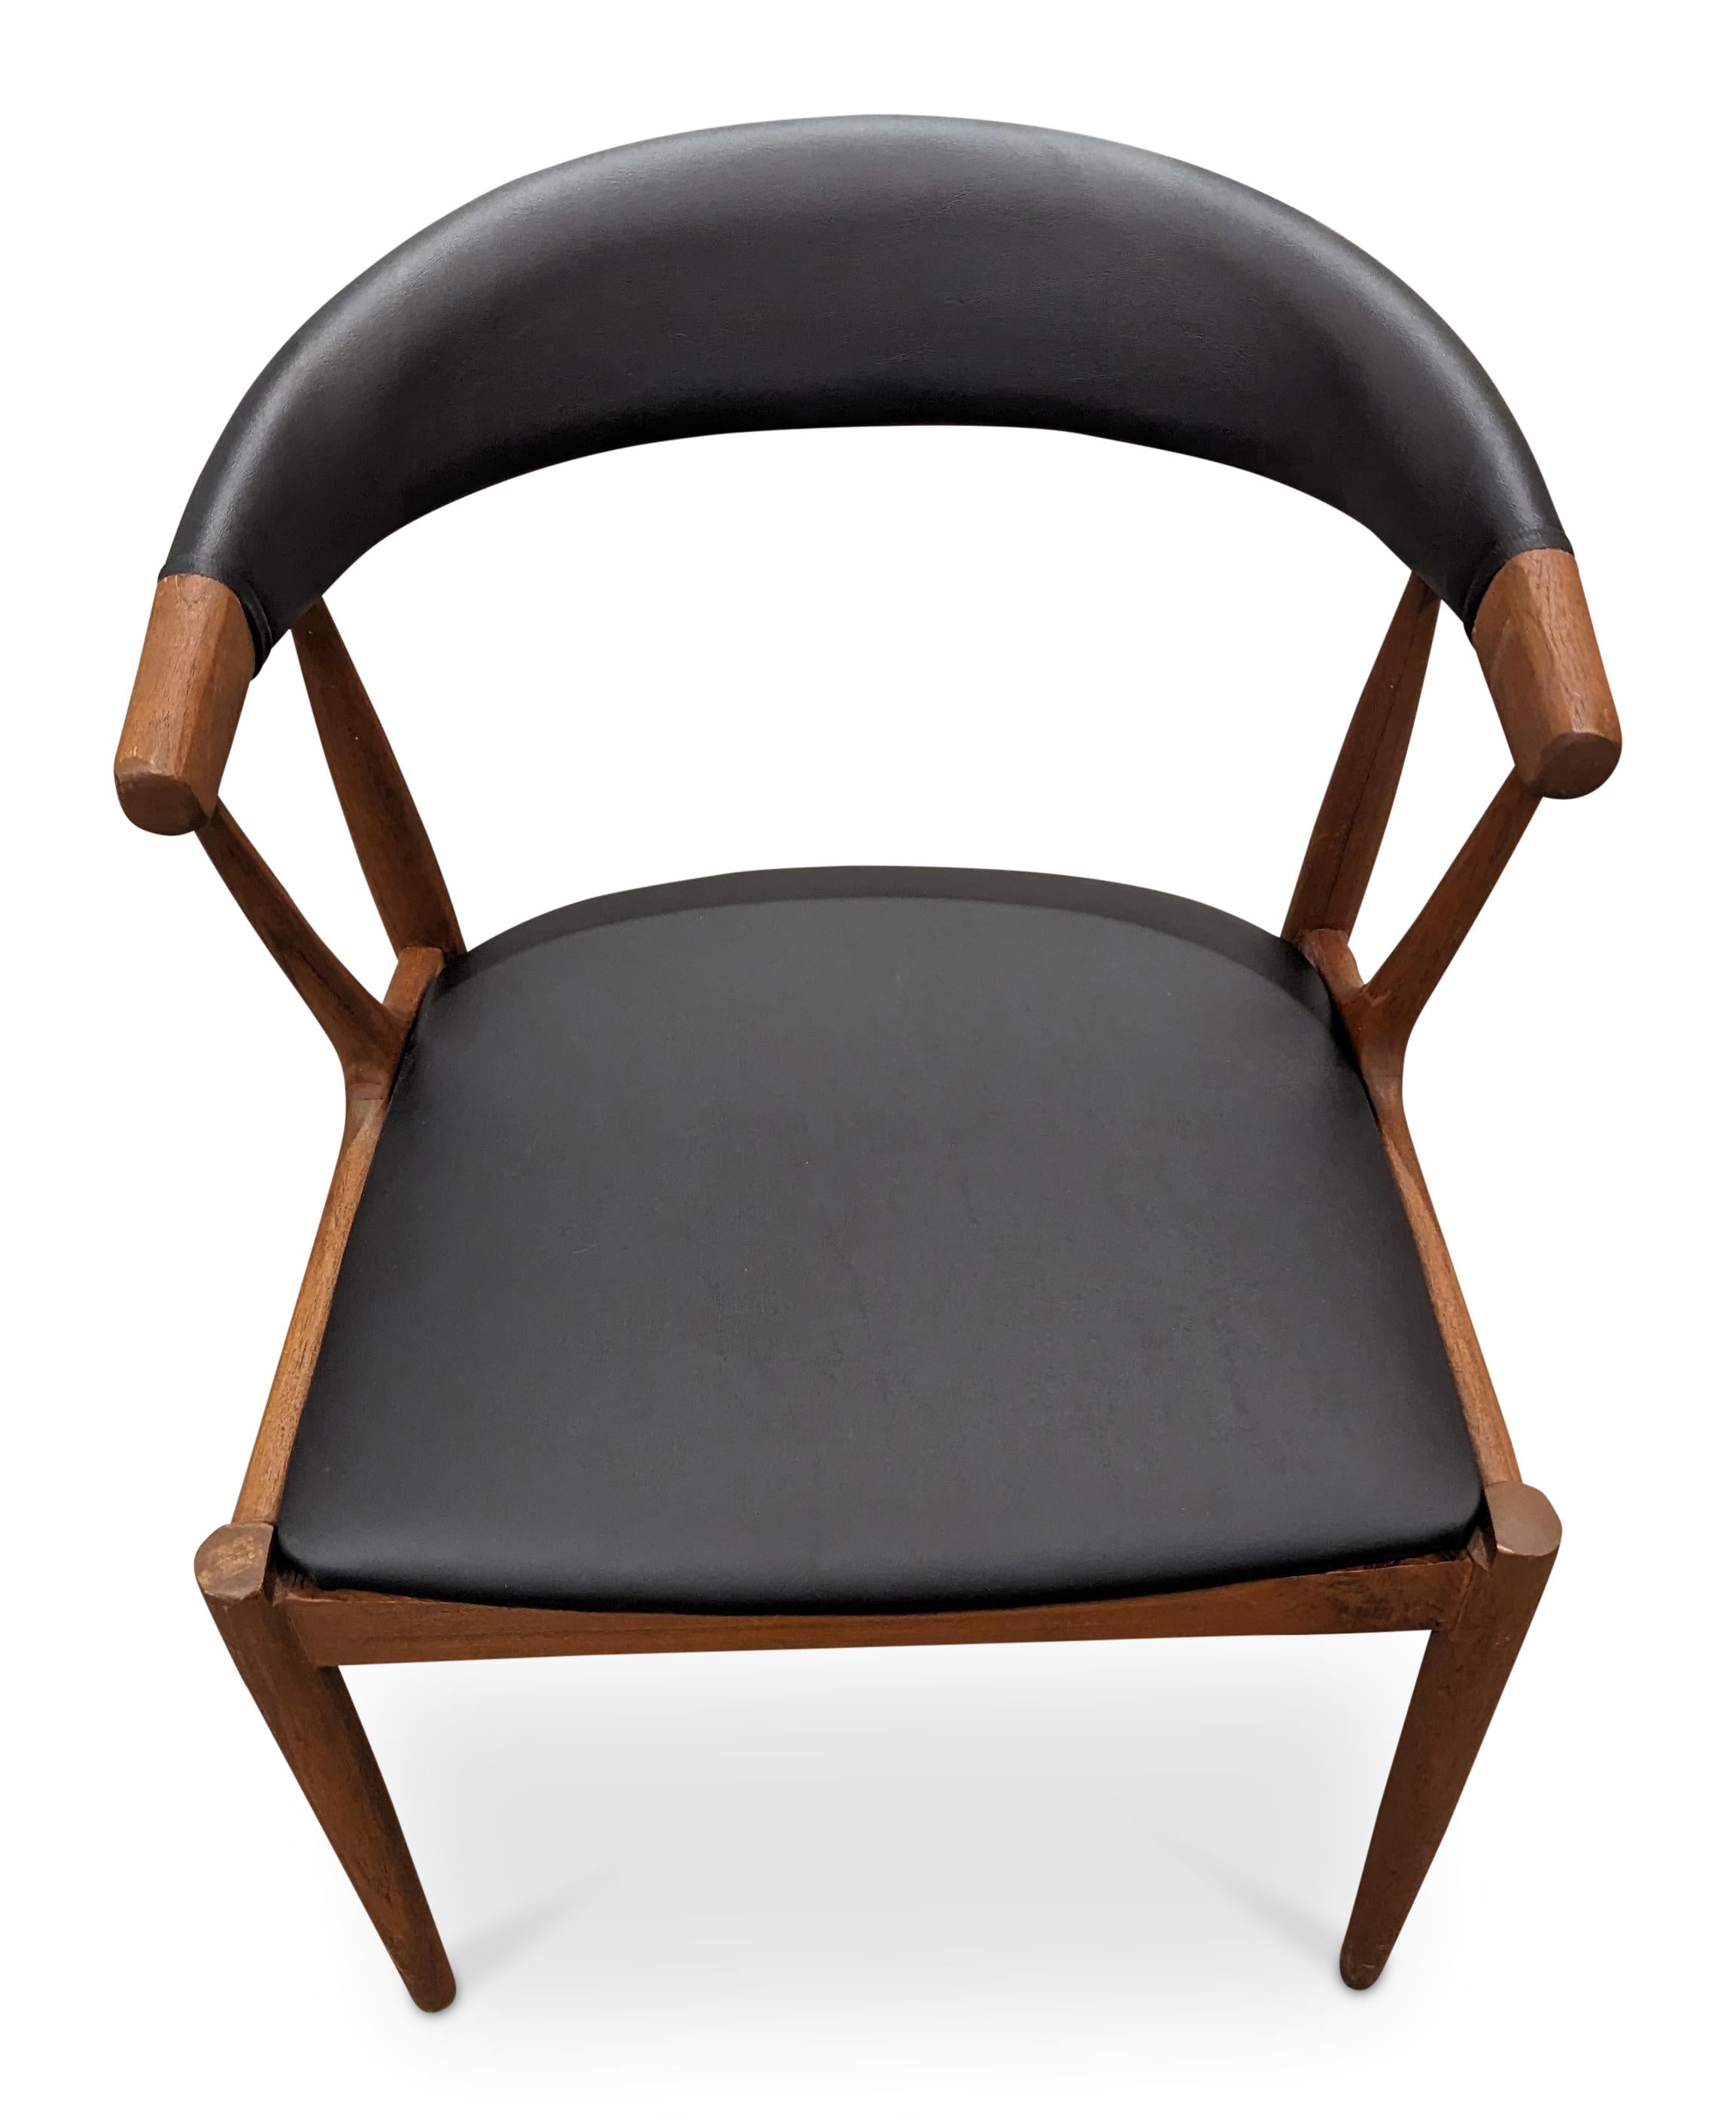 Vintage Danish Mid Century Johannes Andersen Arm Chair - 022432 For Sale 1